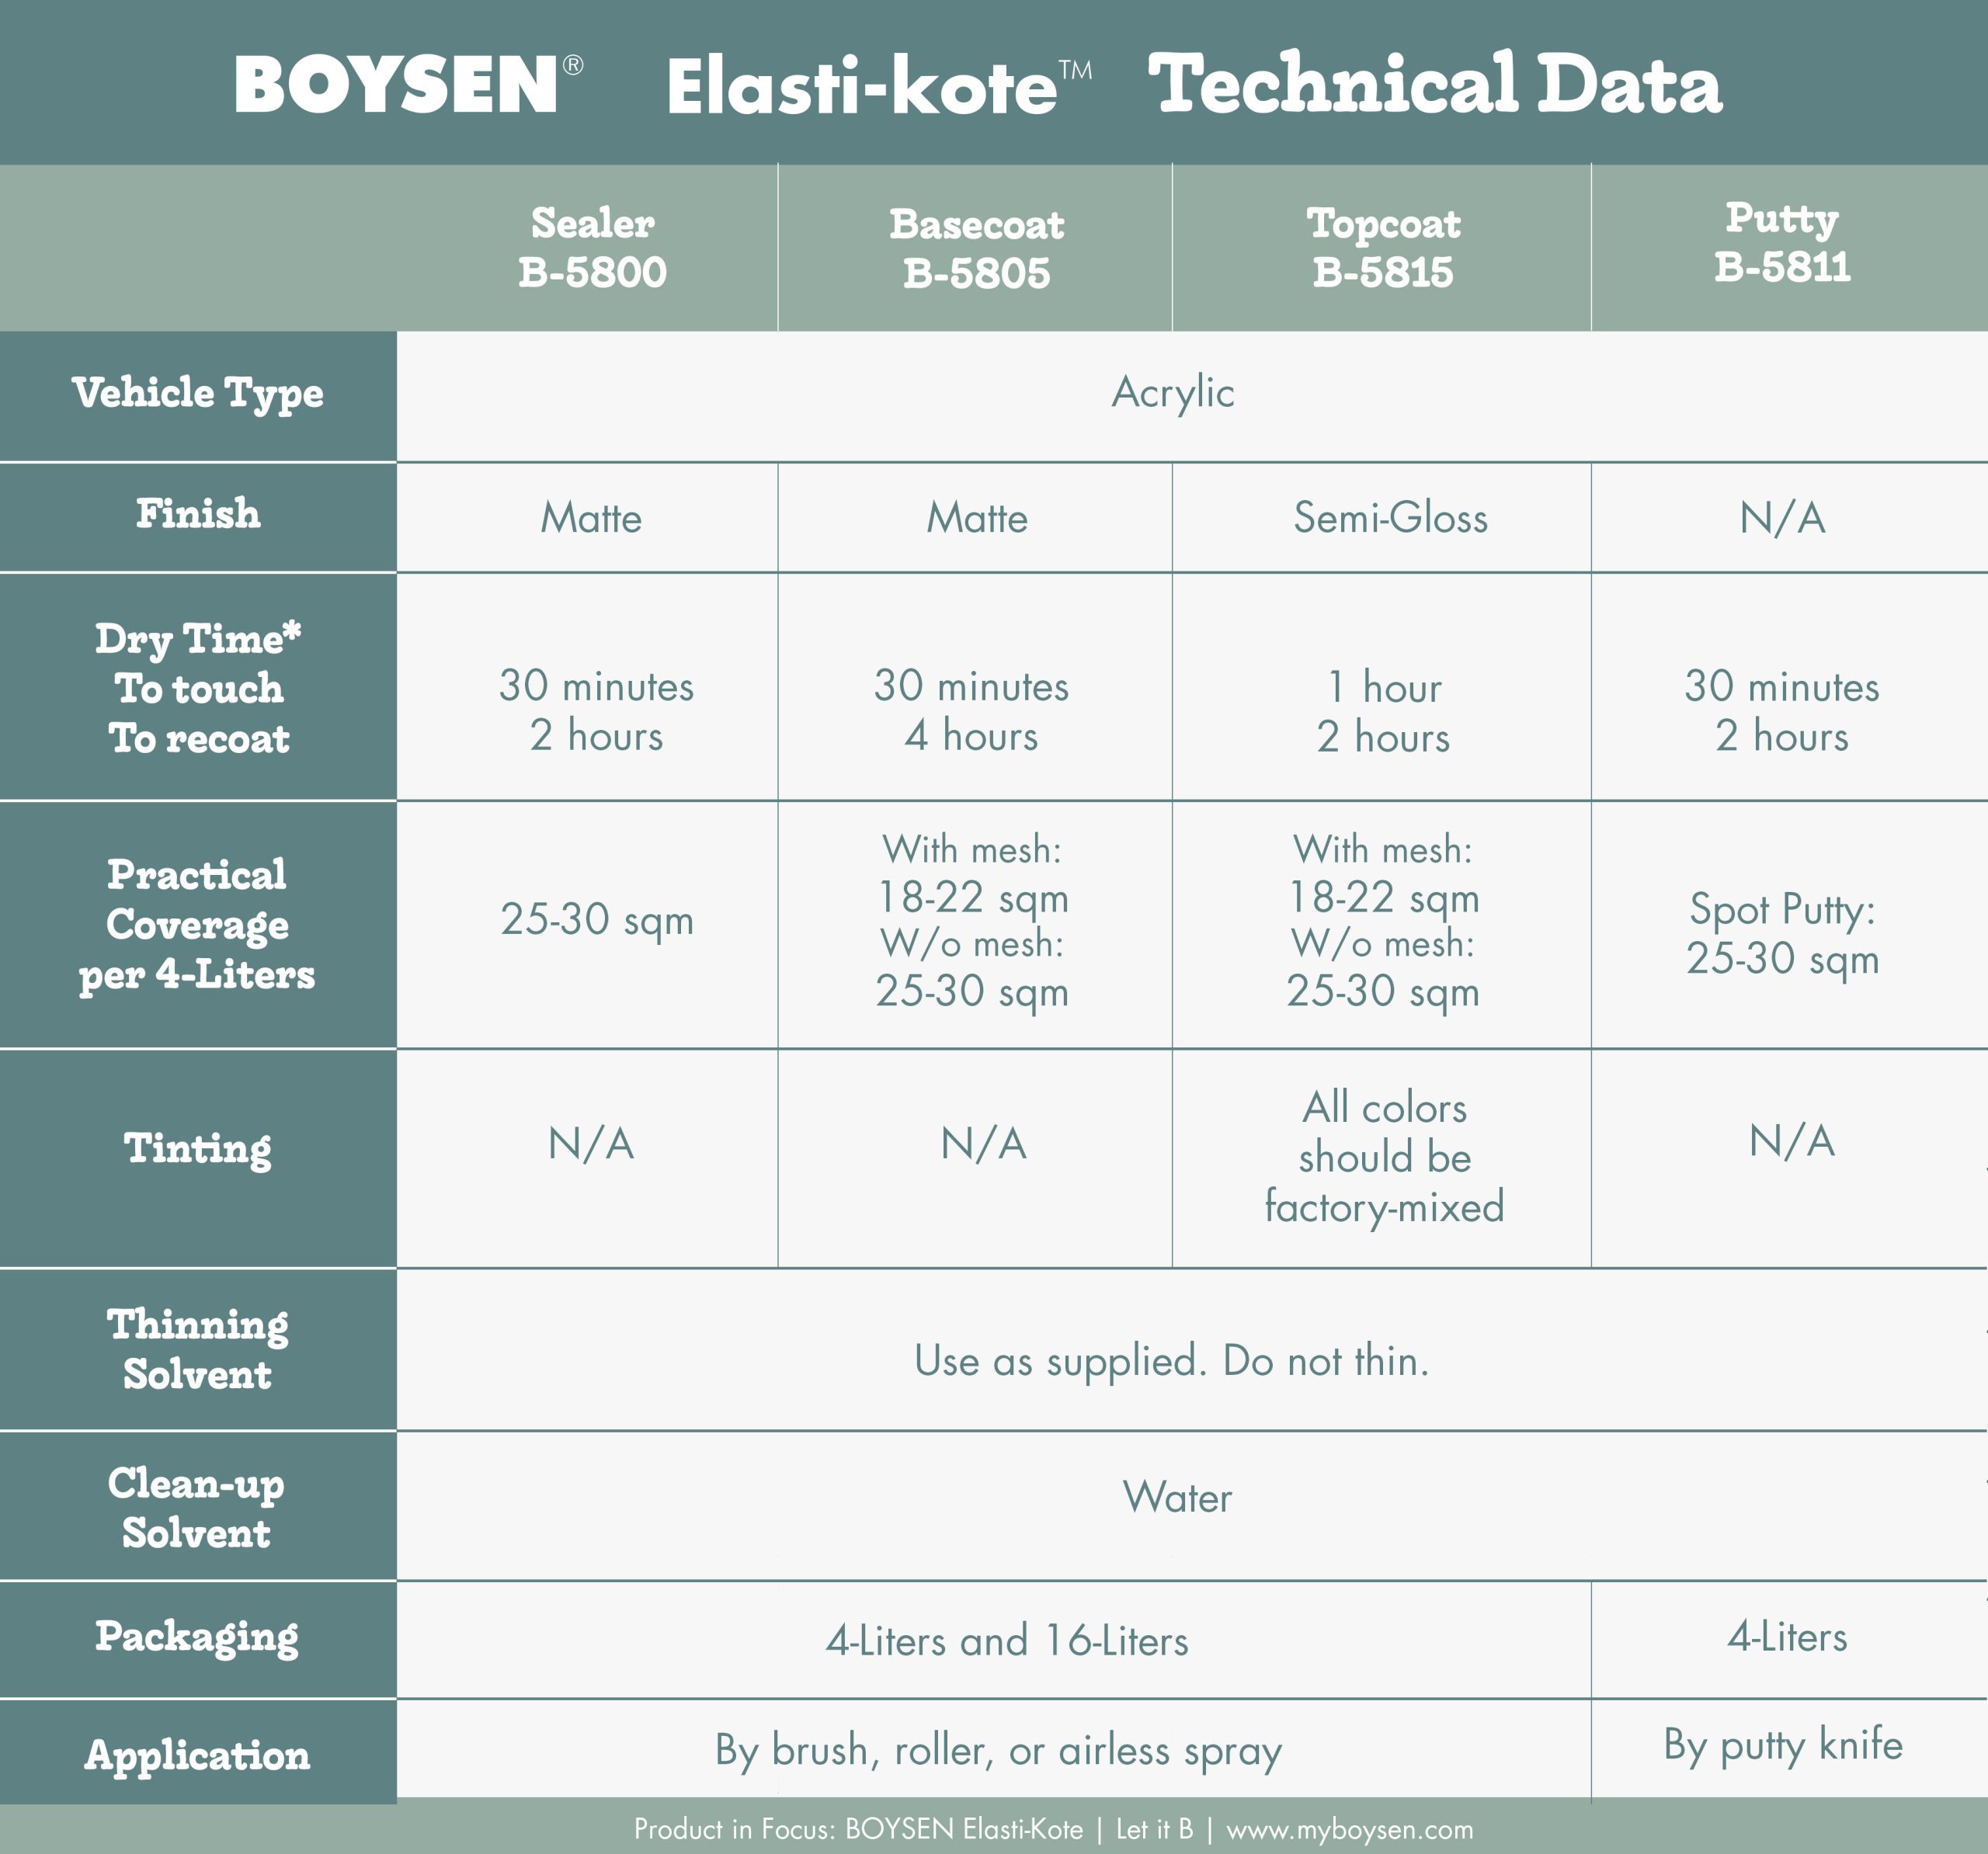 Product in Focus: BOYSEN Elasti-kote | MyBoysen